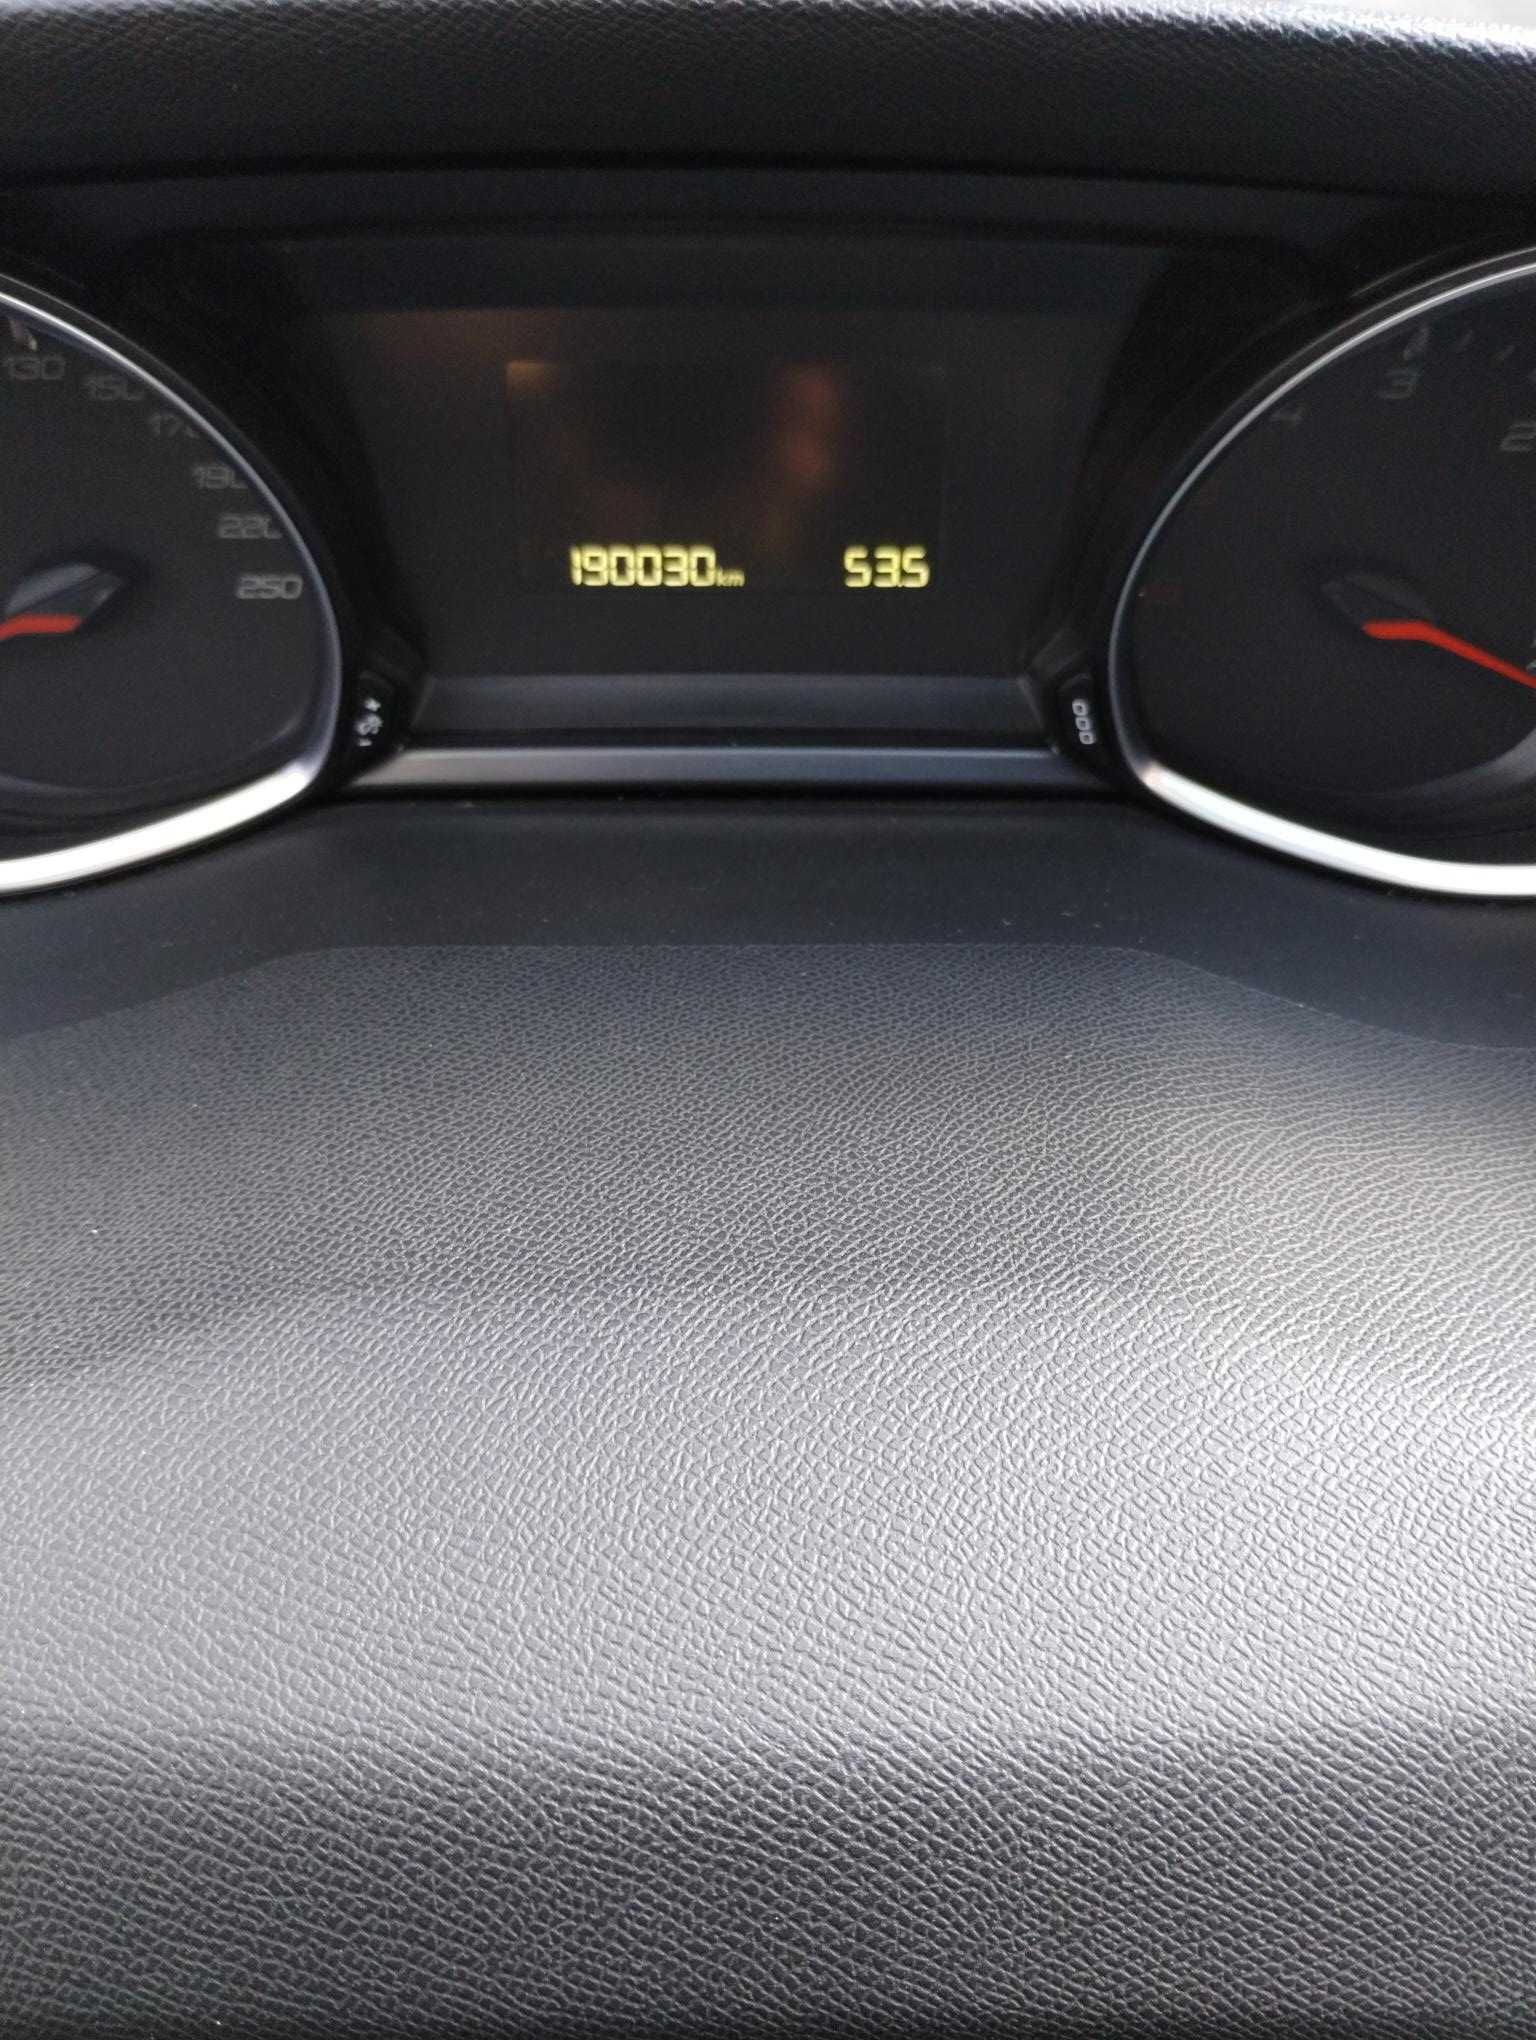 Peugeot 308 2015 1.6 eHDI 116CP 190000 Km 4,8L/100Km, stare excelenta